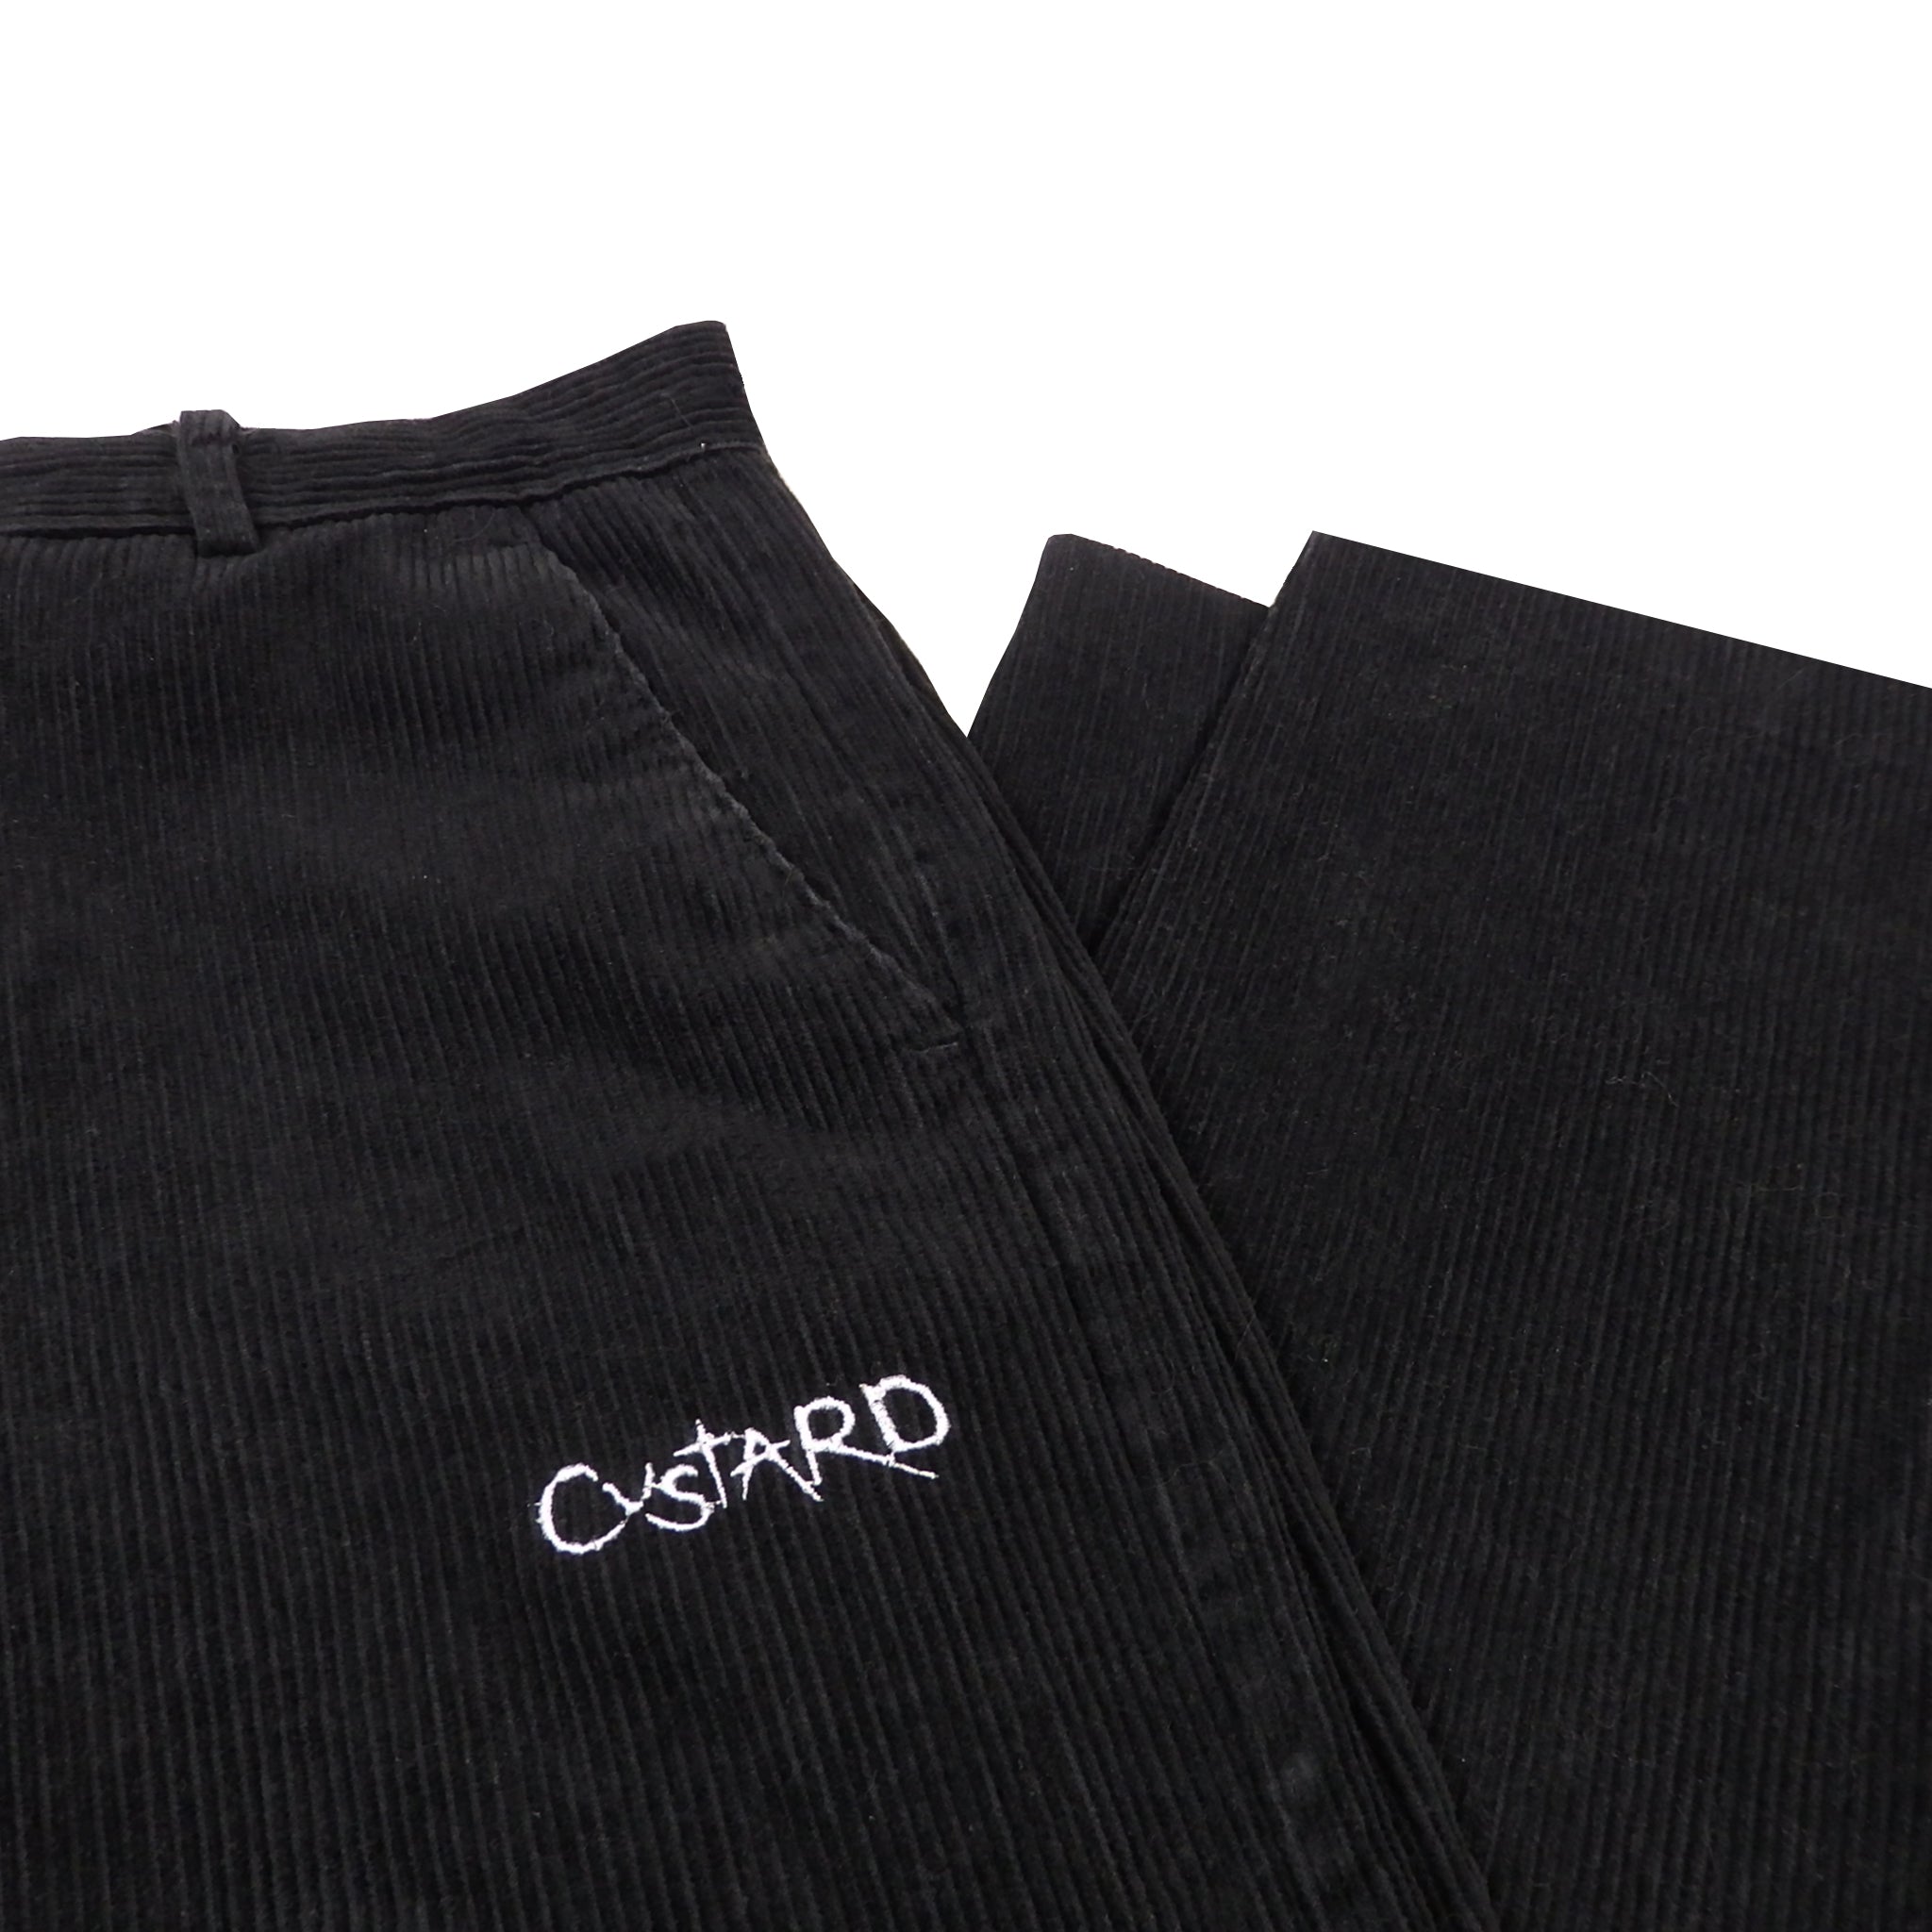 Custard Reclaimed Black Corduroy Trousers | Size 32 x 30